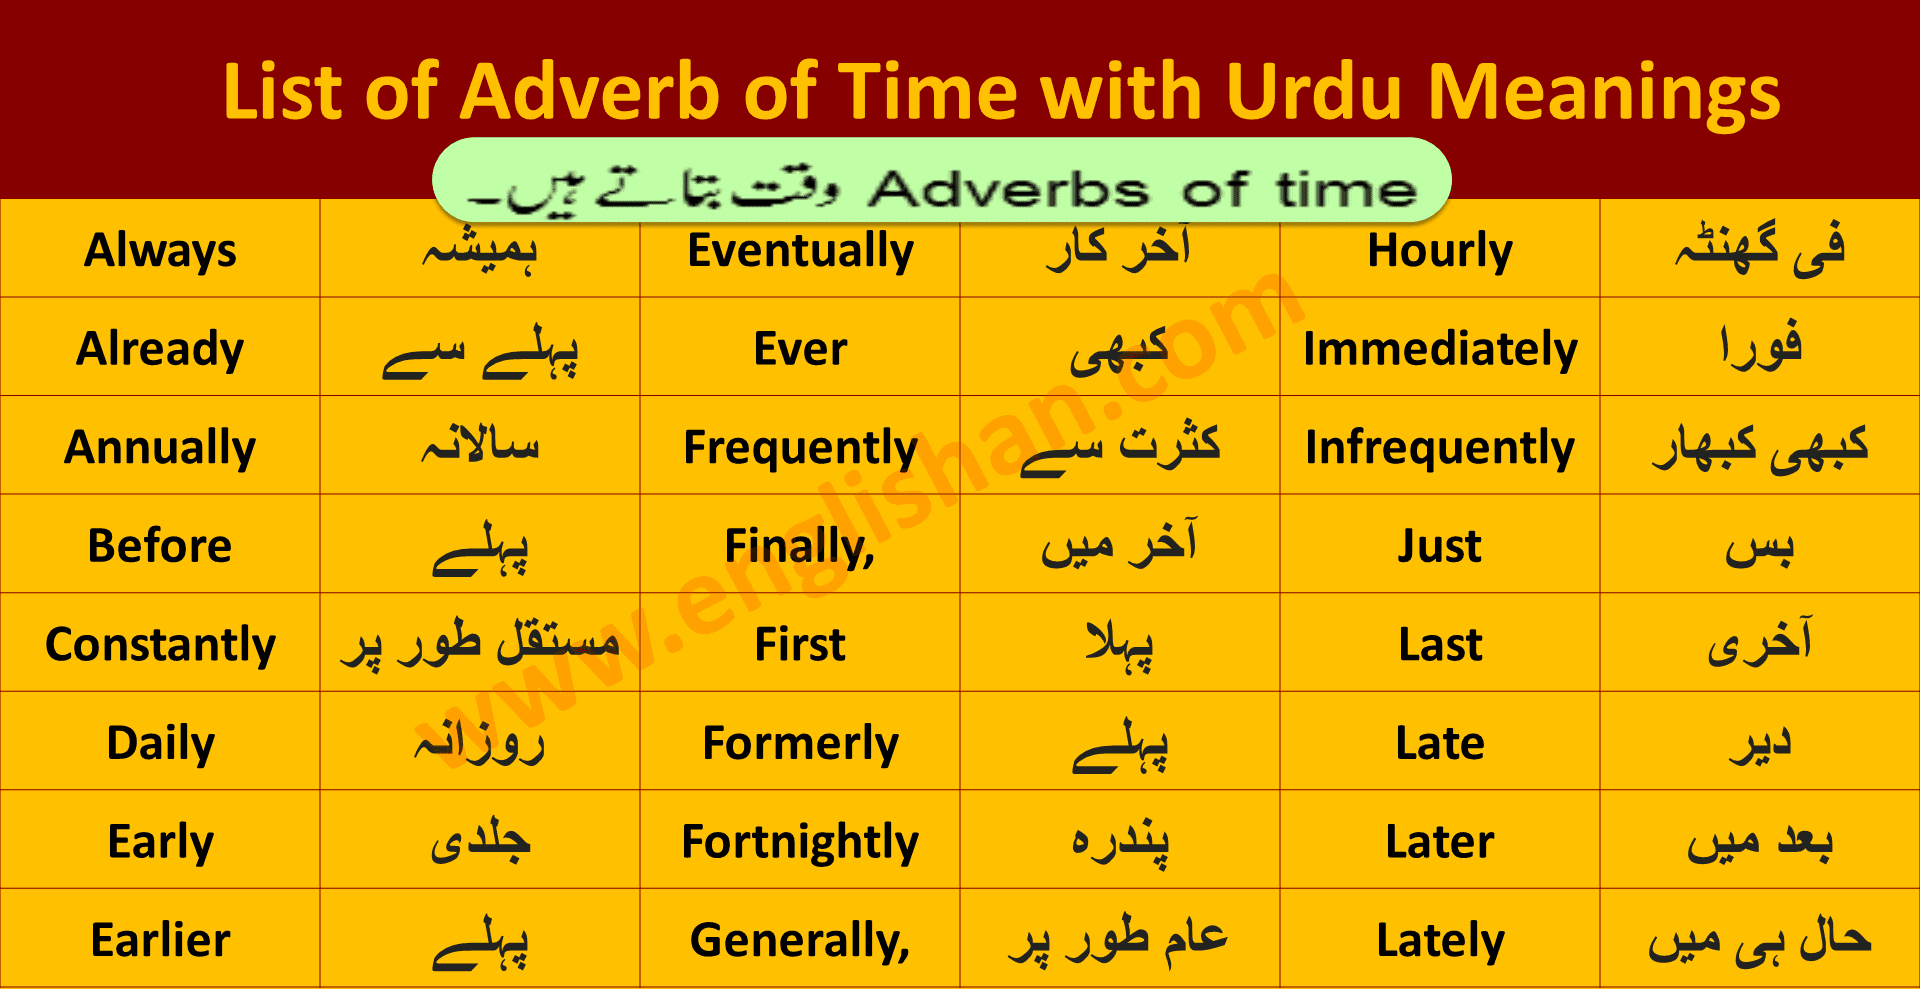 Threesome meaning in urdu